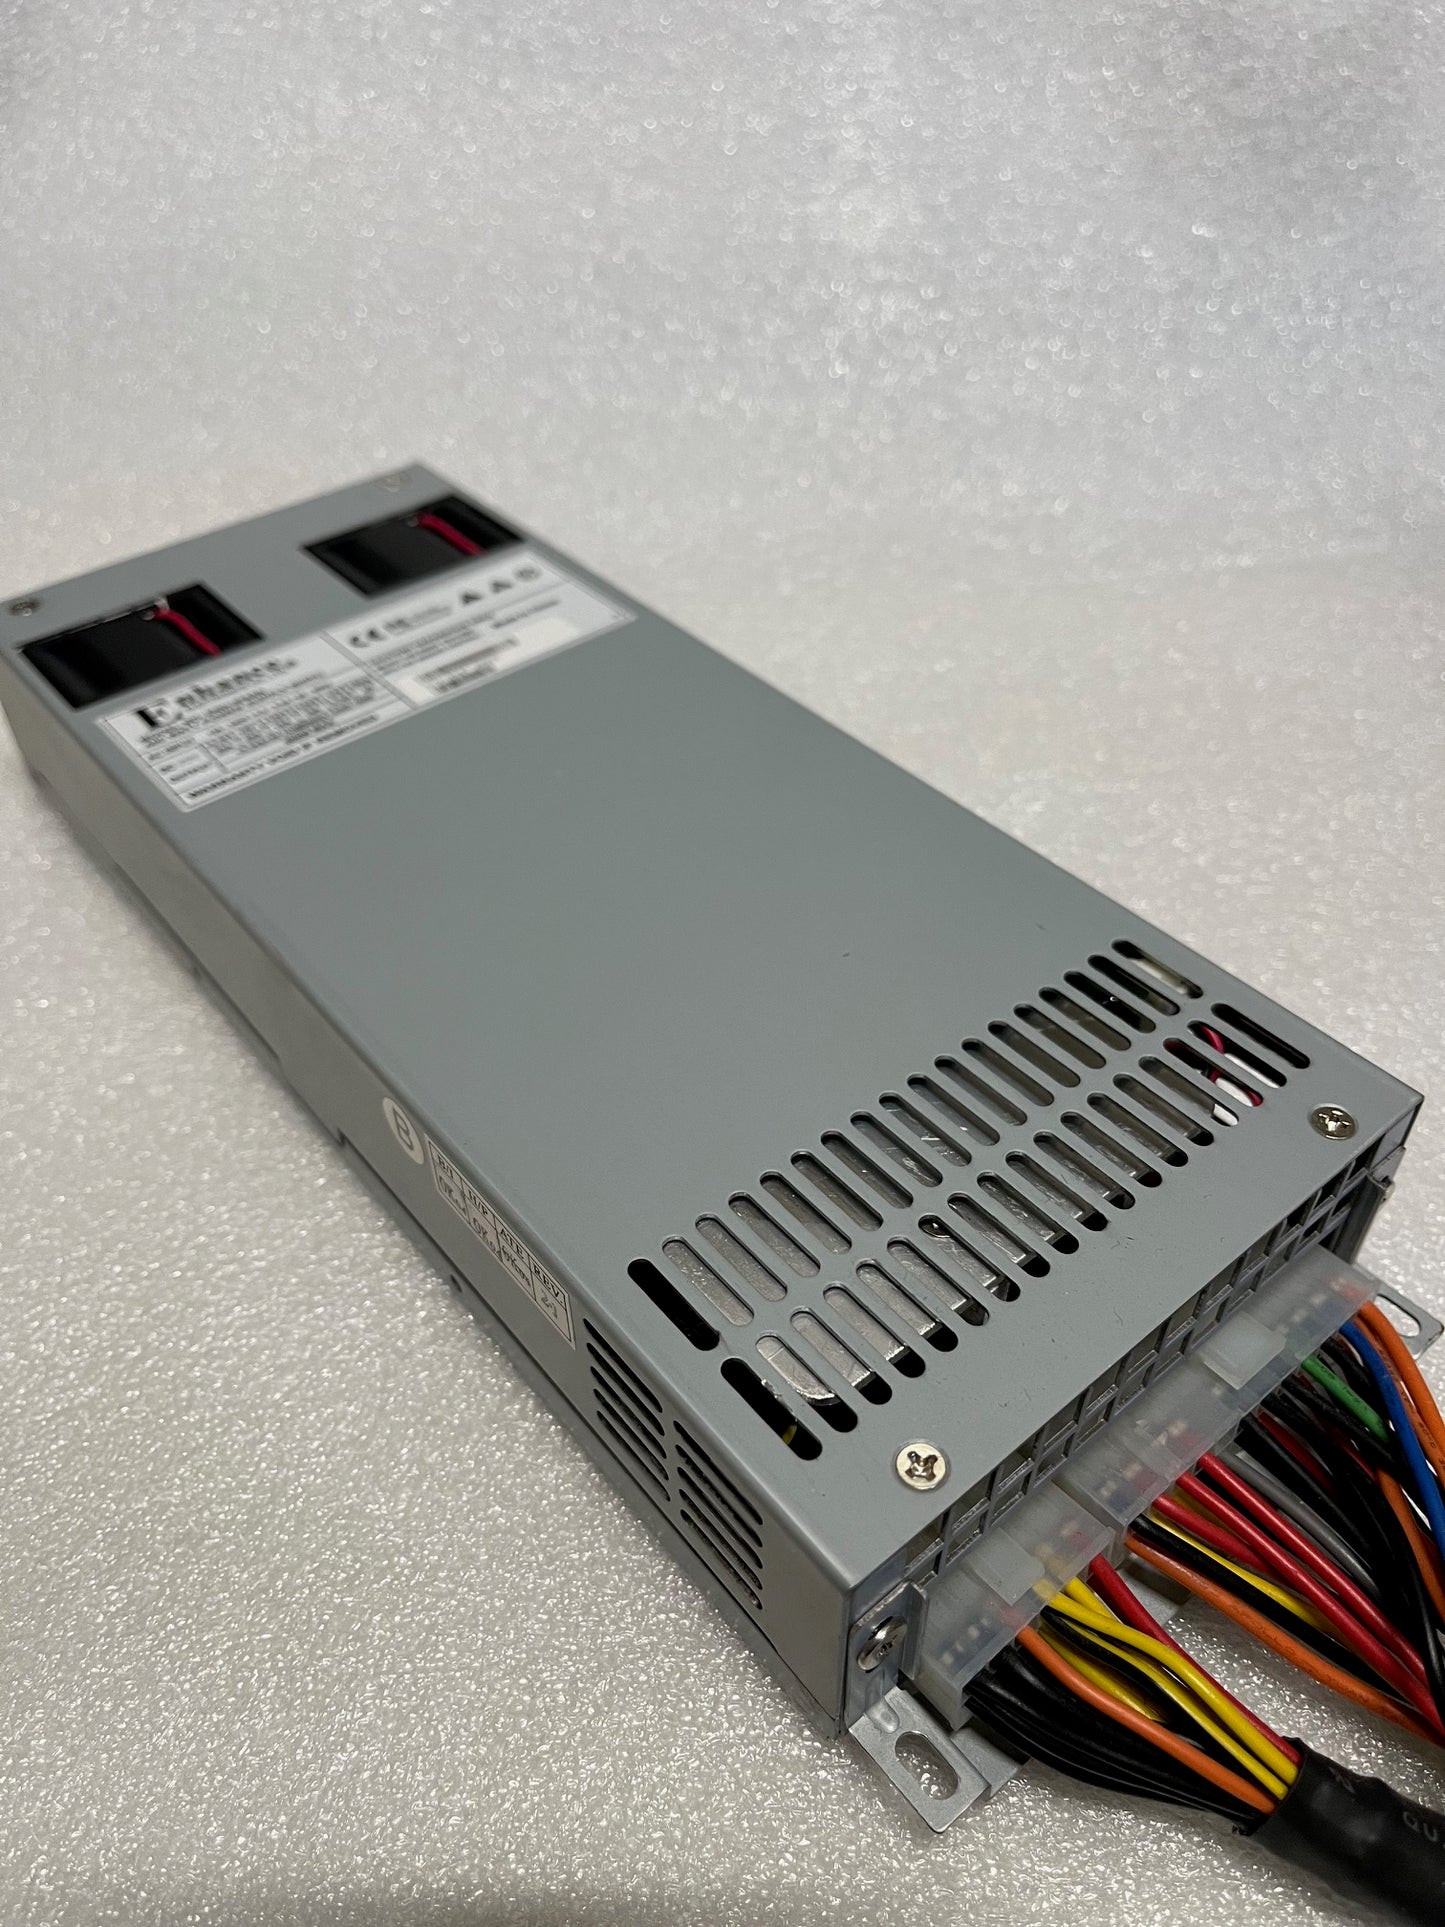 ENH-0840, ENH-0840A, ENH-0840A-G, Original Enhance 400W 1U EPS12V 24-Pin (20+4) Power Supply Active PFC, RoHS Compliant, PCI Express, SATA